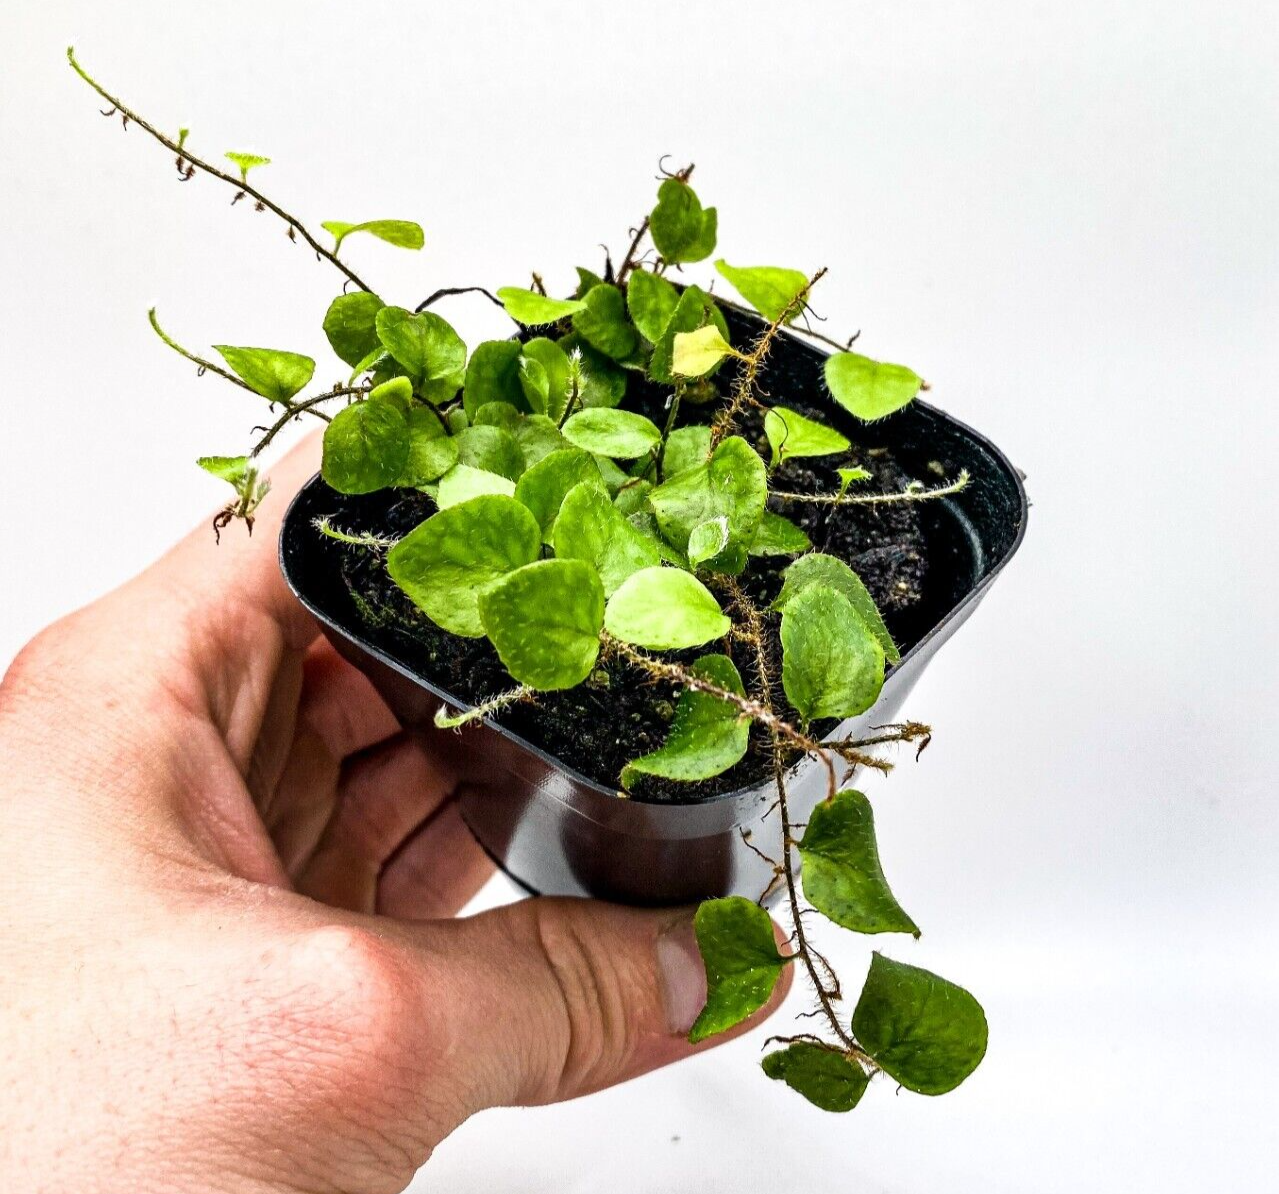 Microgramma tecta (2.5" Pot) Miniature Epiphytic Fern /Dart Frog Terrarium Plant Creation Cultivated Microgramma tecta